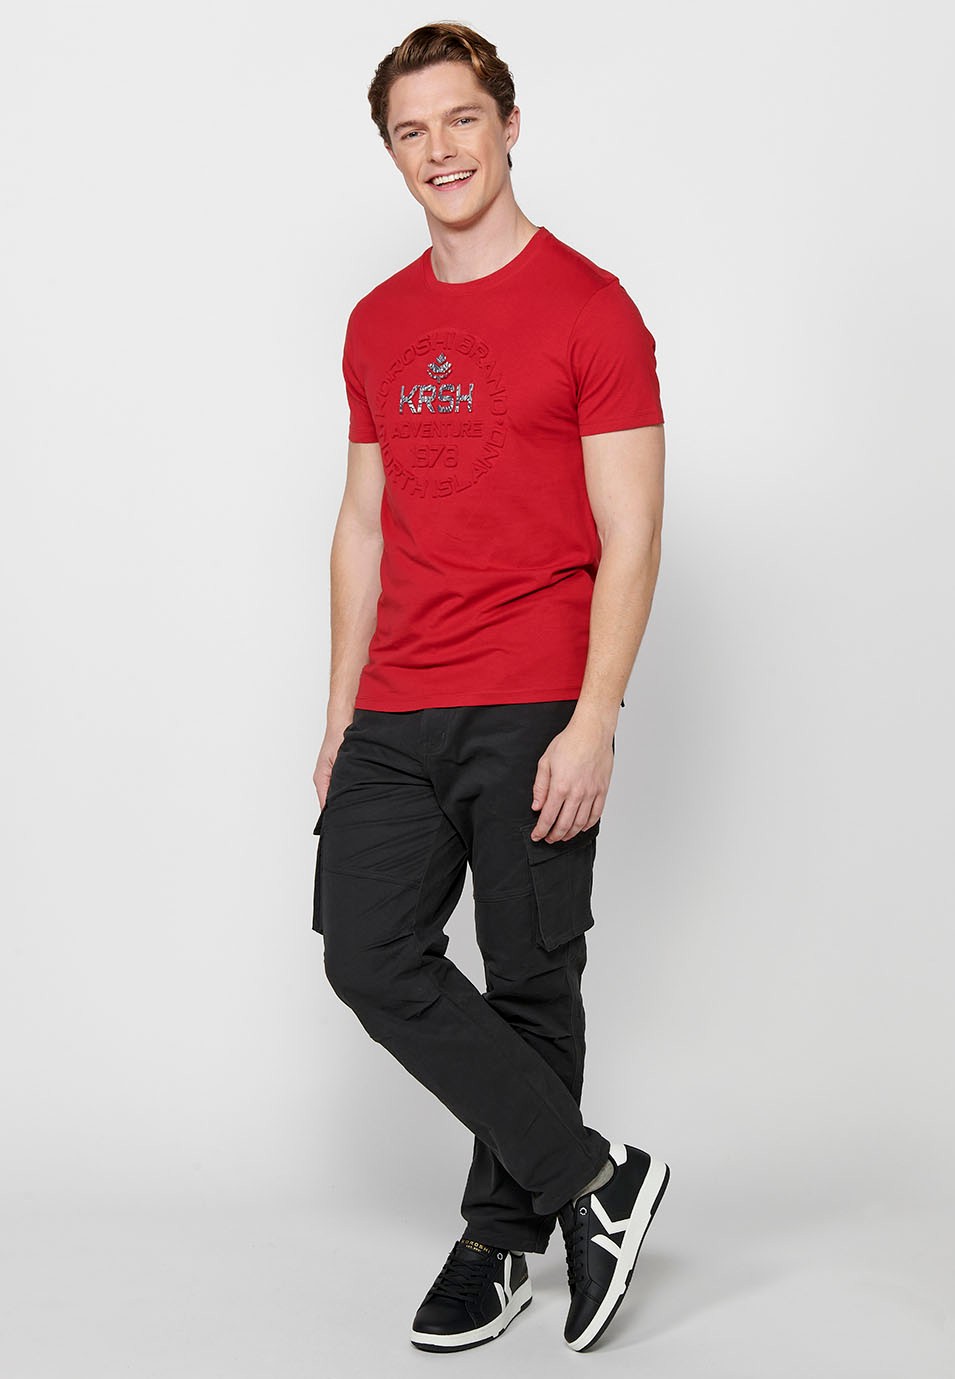 Men's Red Color Round Neck Cotton Short Sleeve T-shirt 7